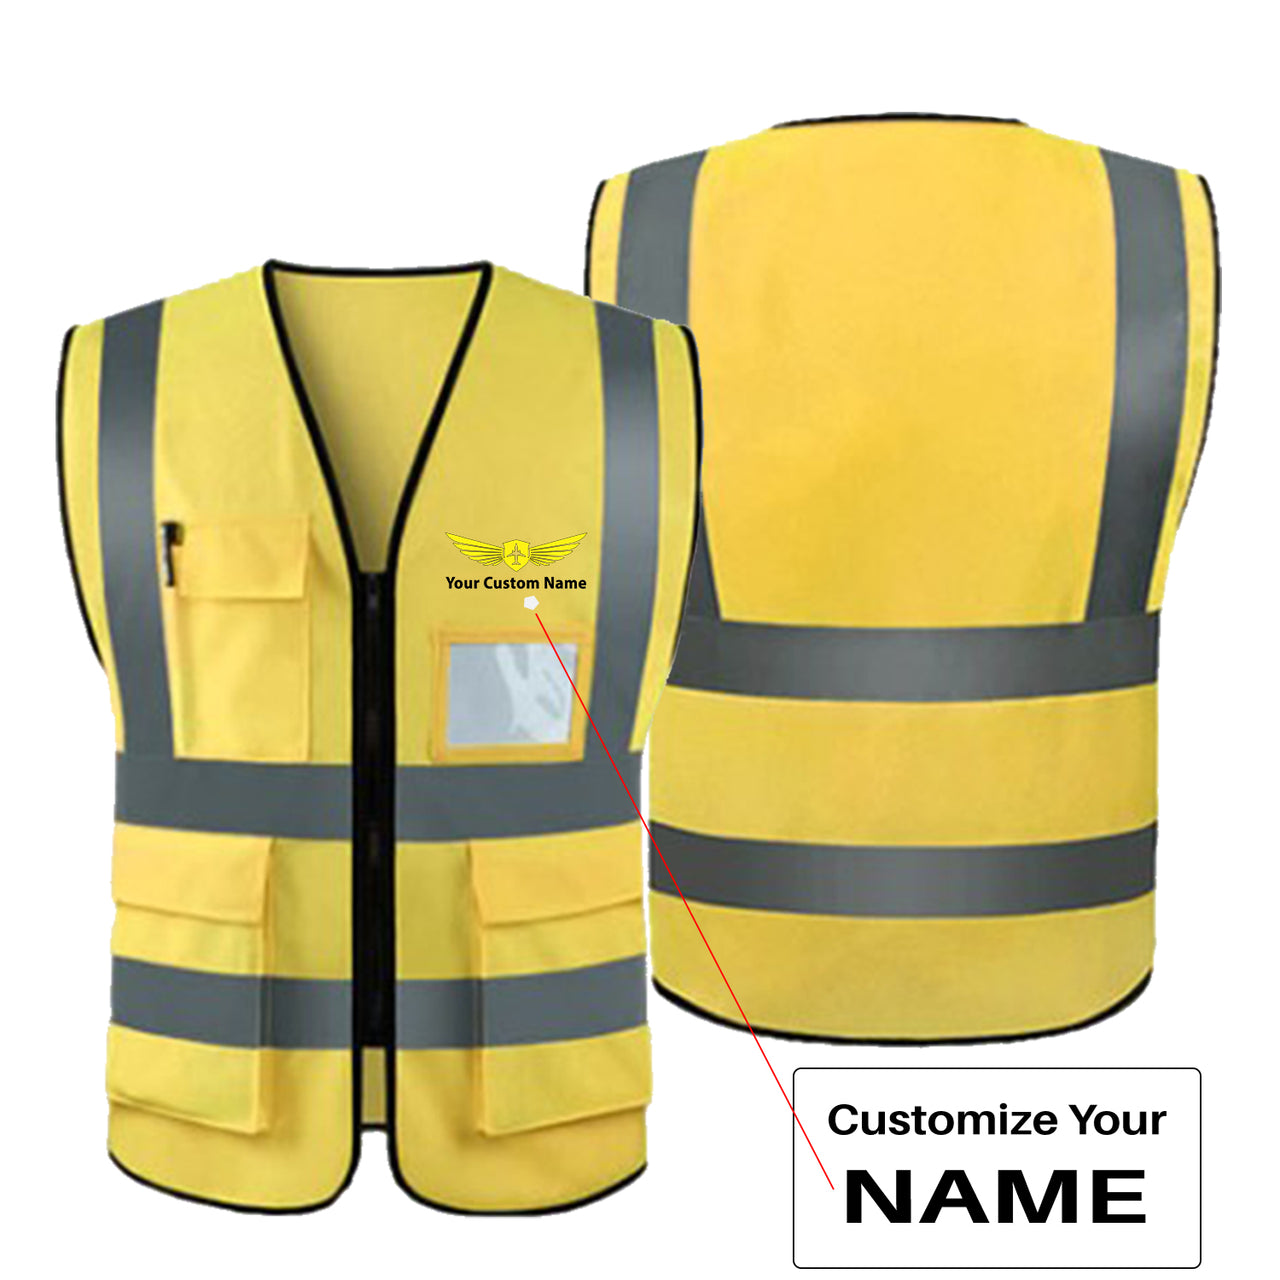 Custom Name with Badge 2 Designed Reflective Vests